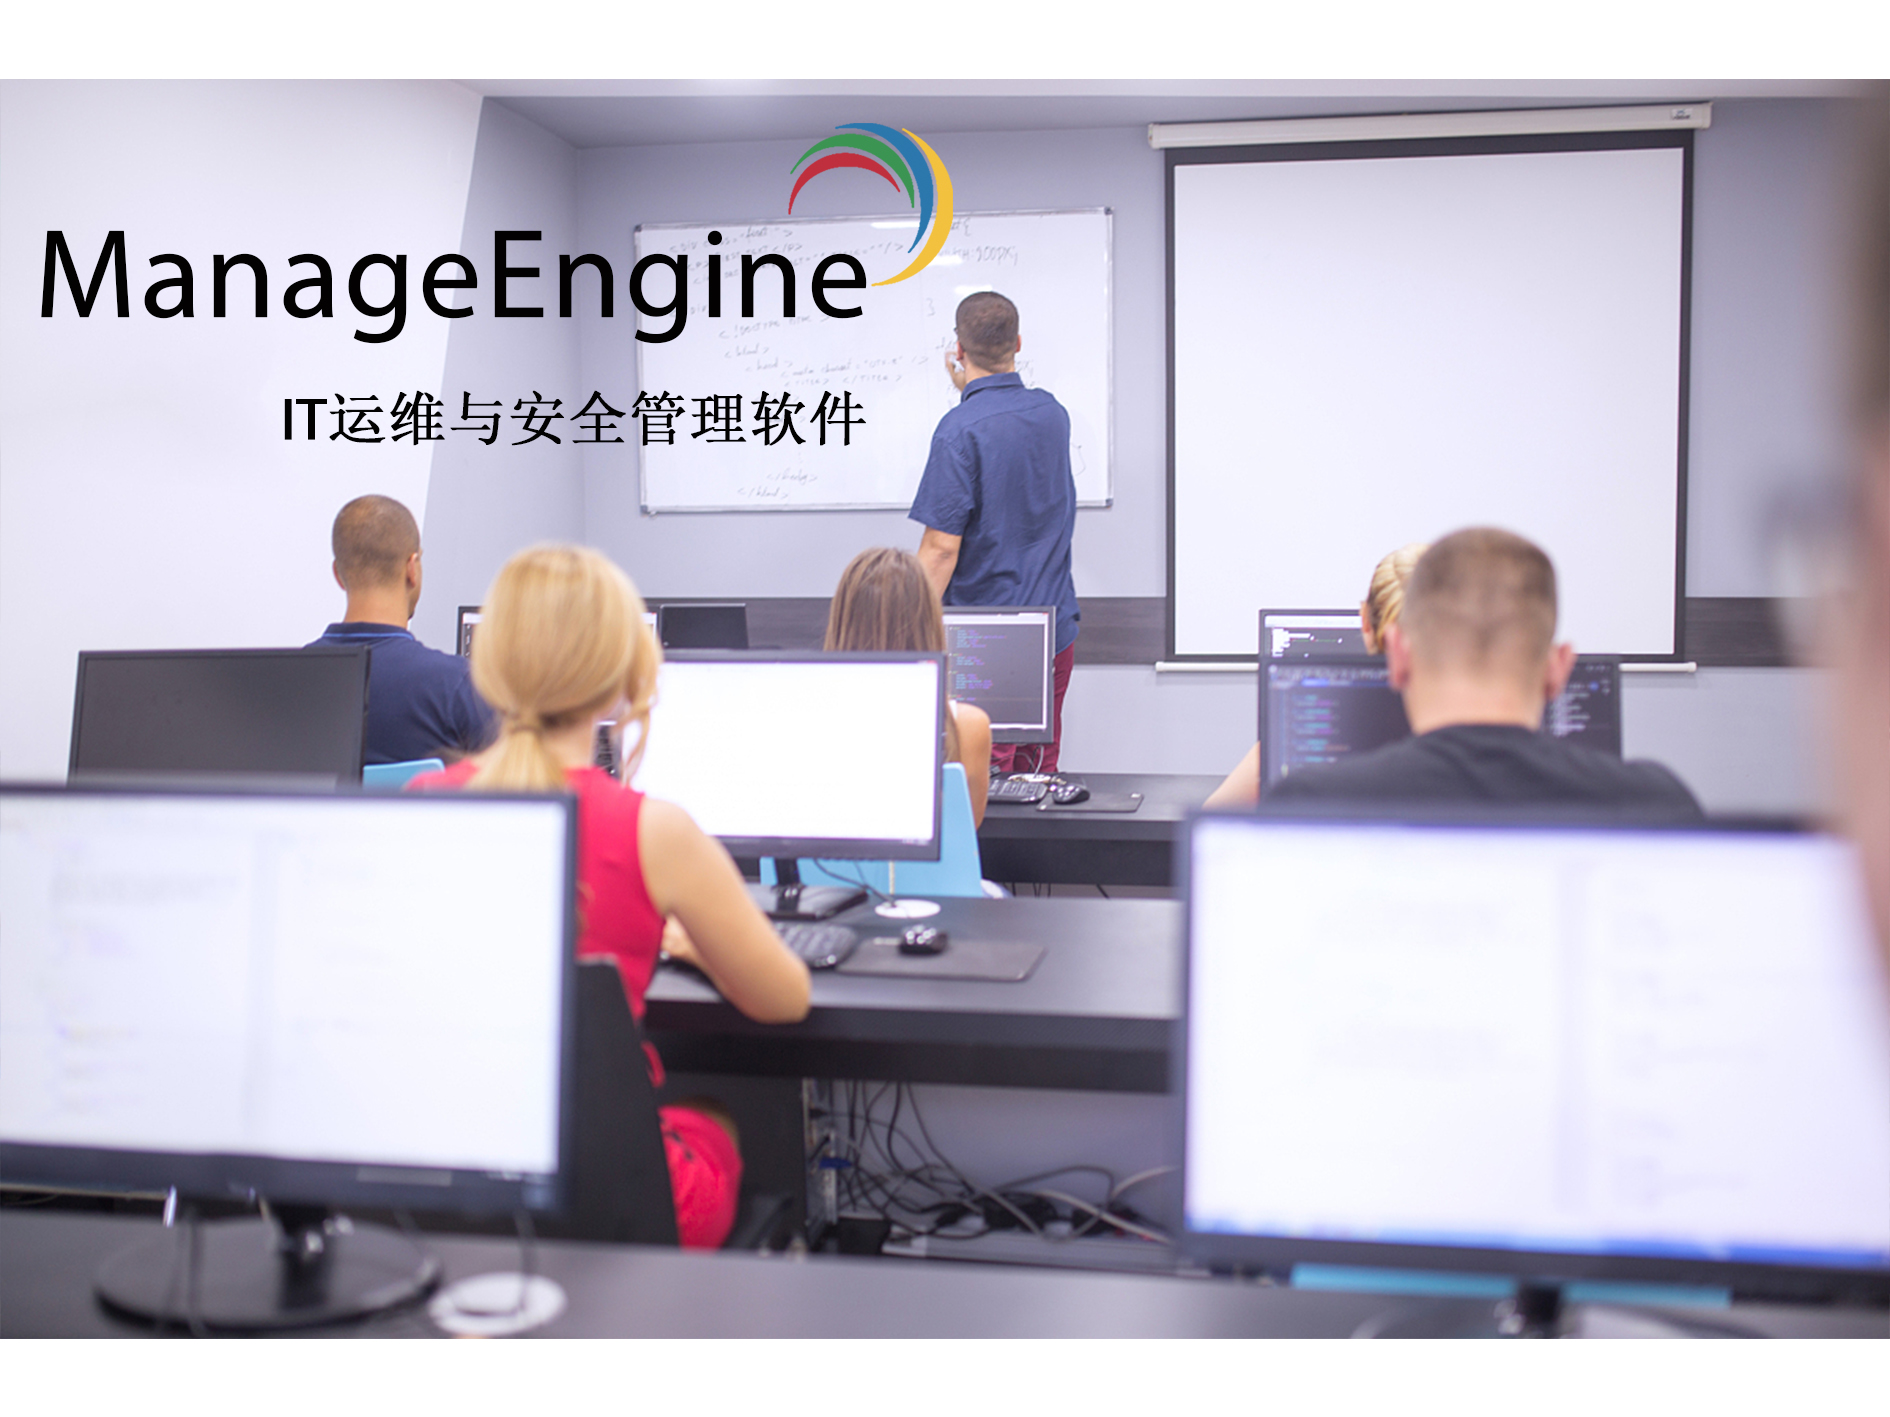 IT 服务标准化管理 - ManageEngine IT服务管理